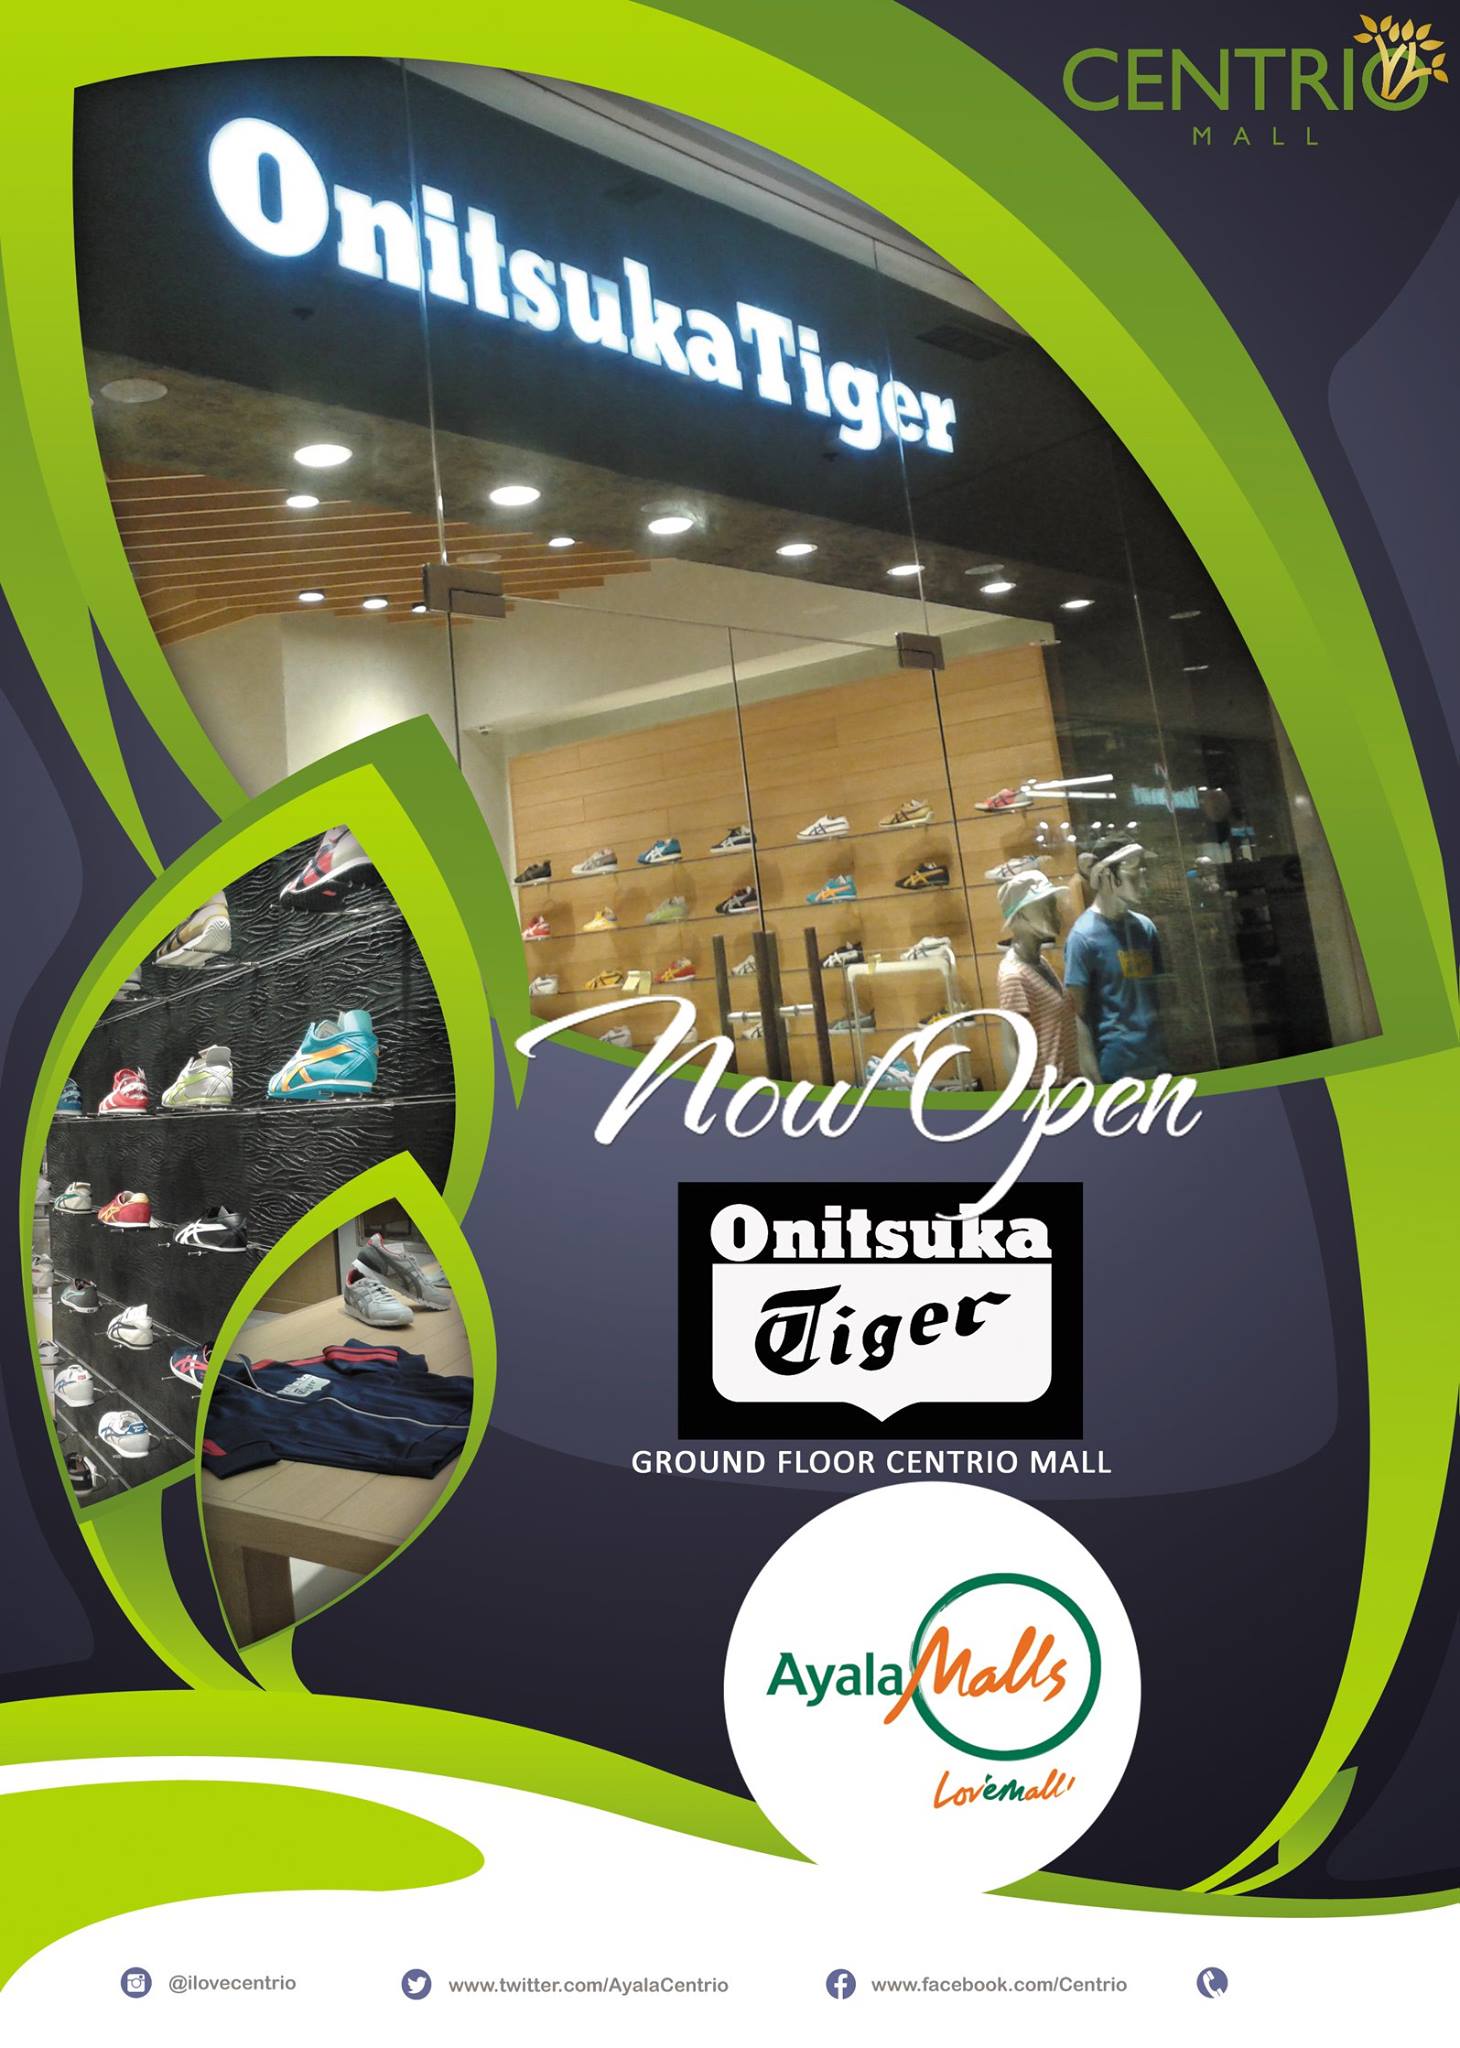 Onitsuka Tiger Is Now Open @ Ayala Mall | CDO Encyclopedia | Promote